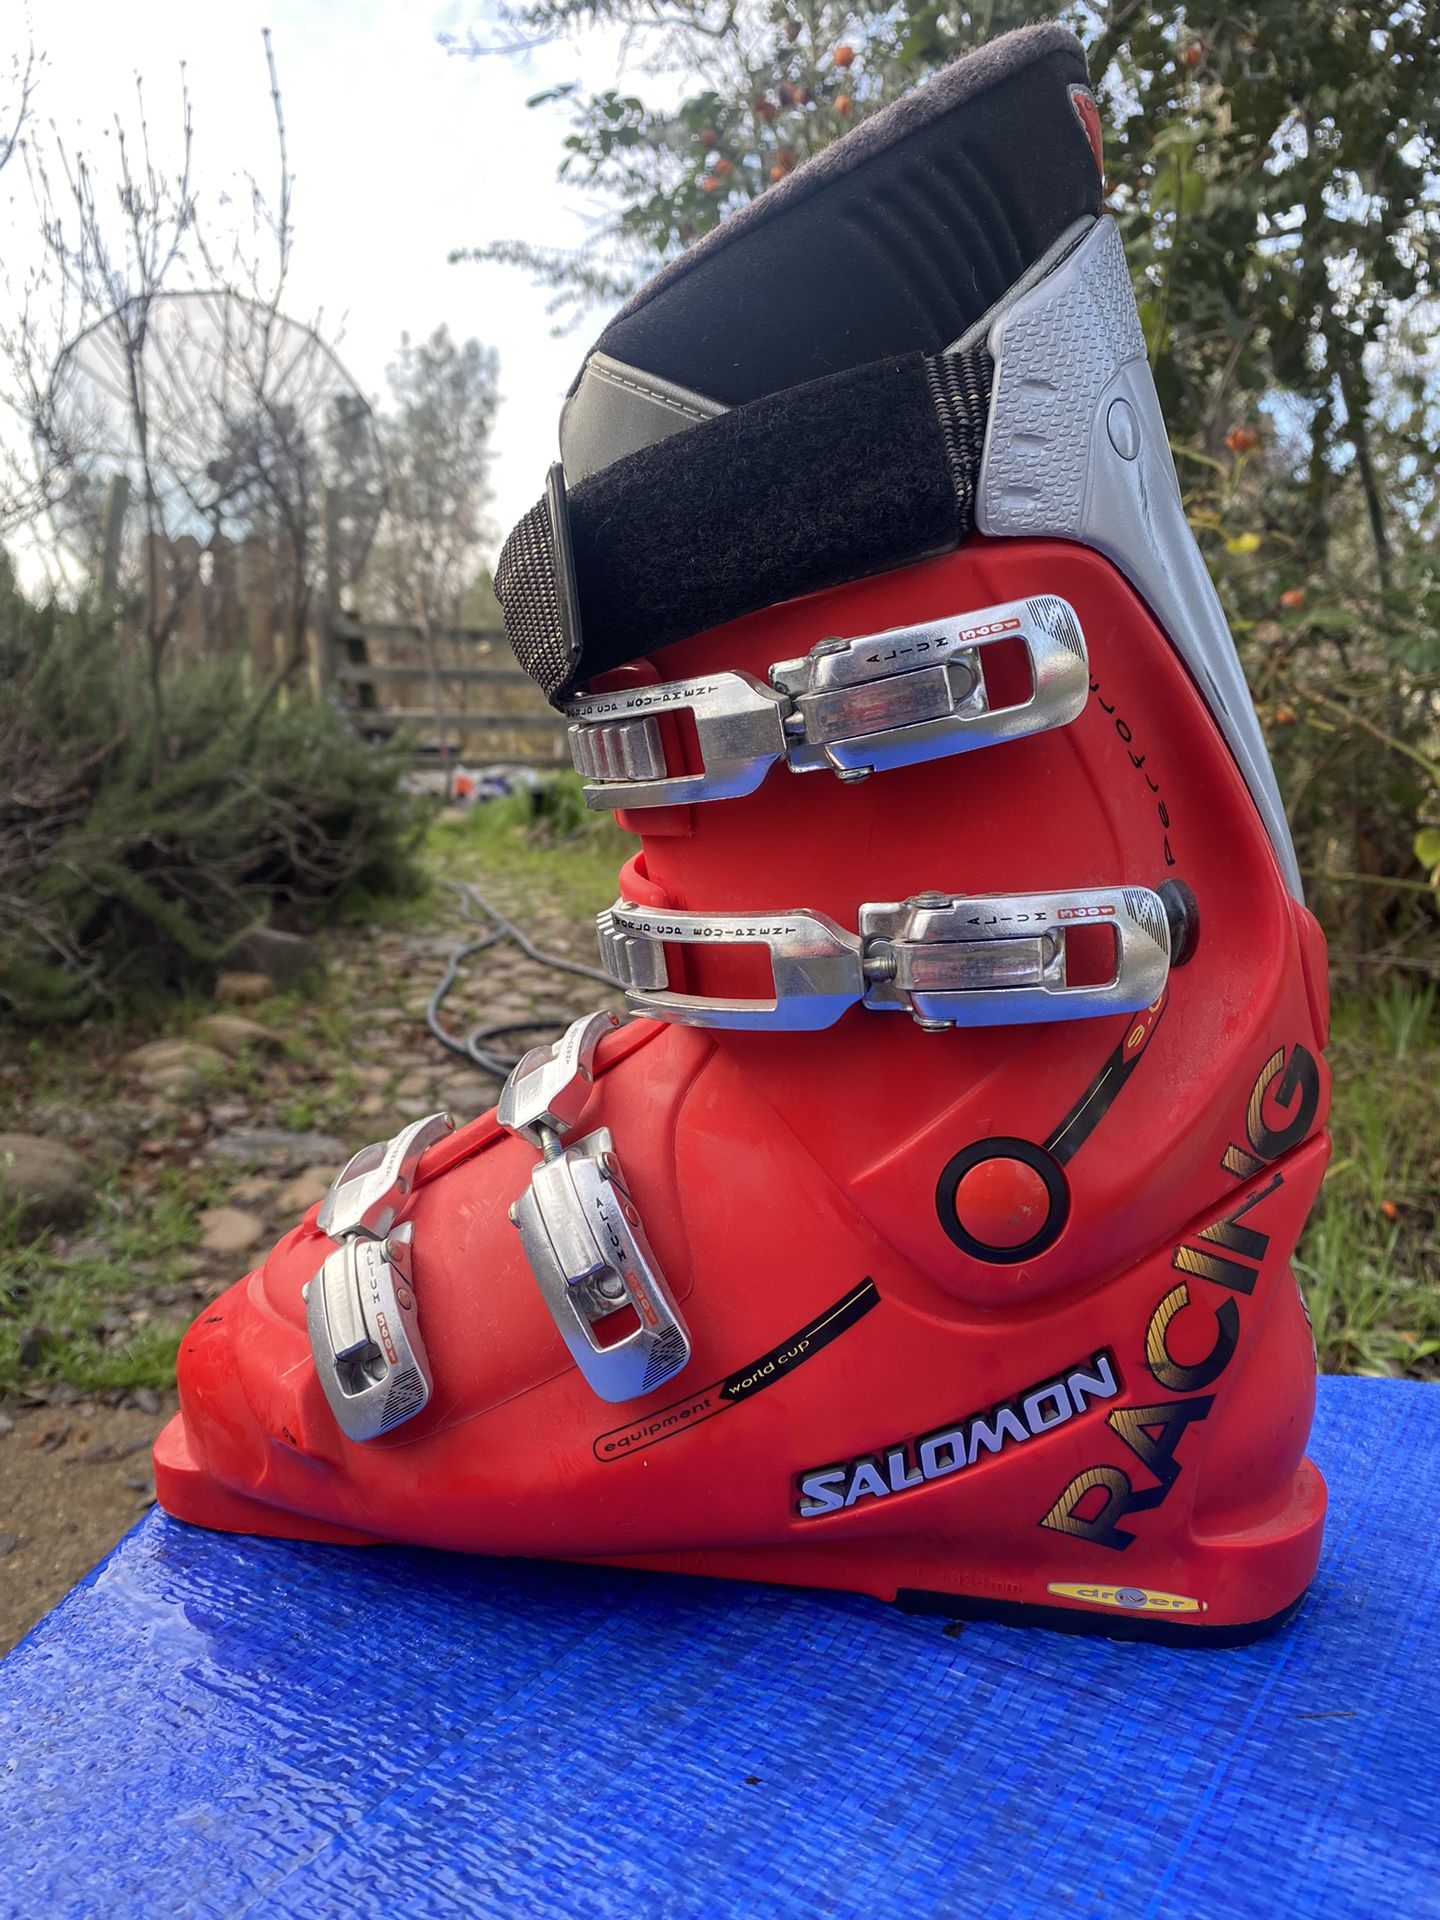 Salomon Racing World Cup Equipment Snowboarding Shoes